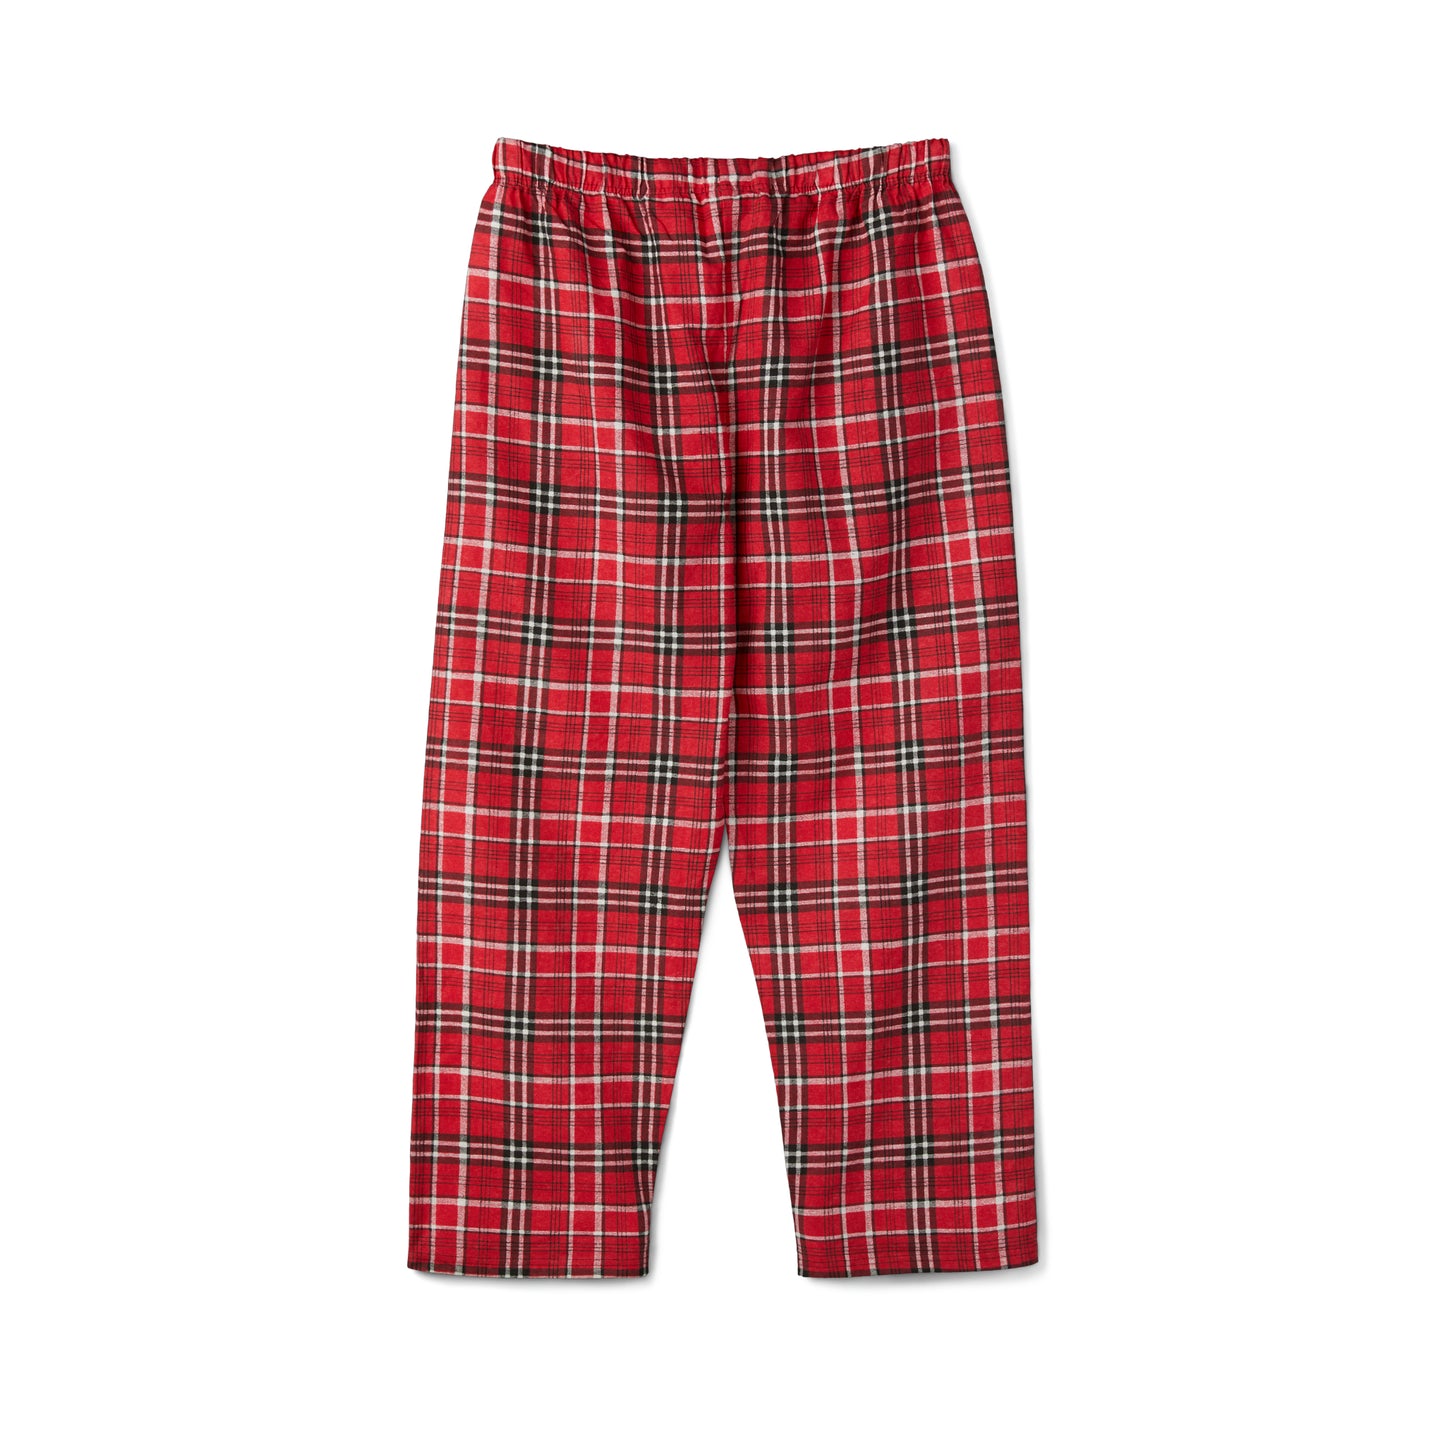 Pinch Proof Long Sleeve Pajama Set